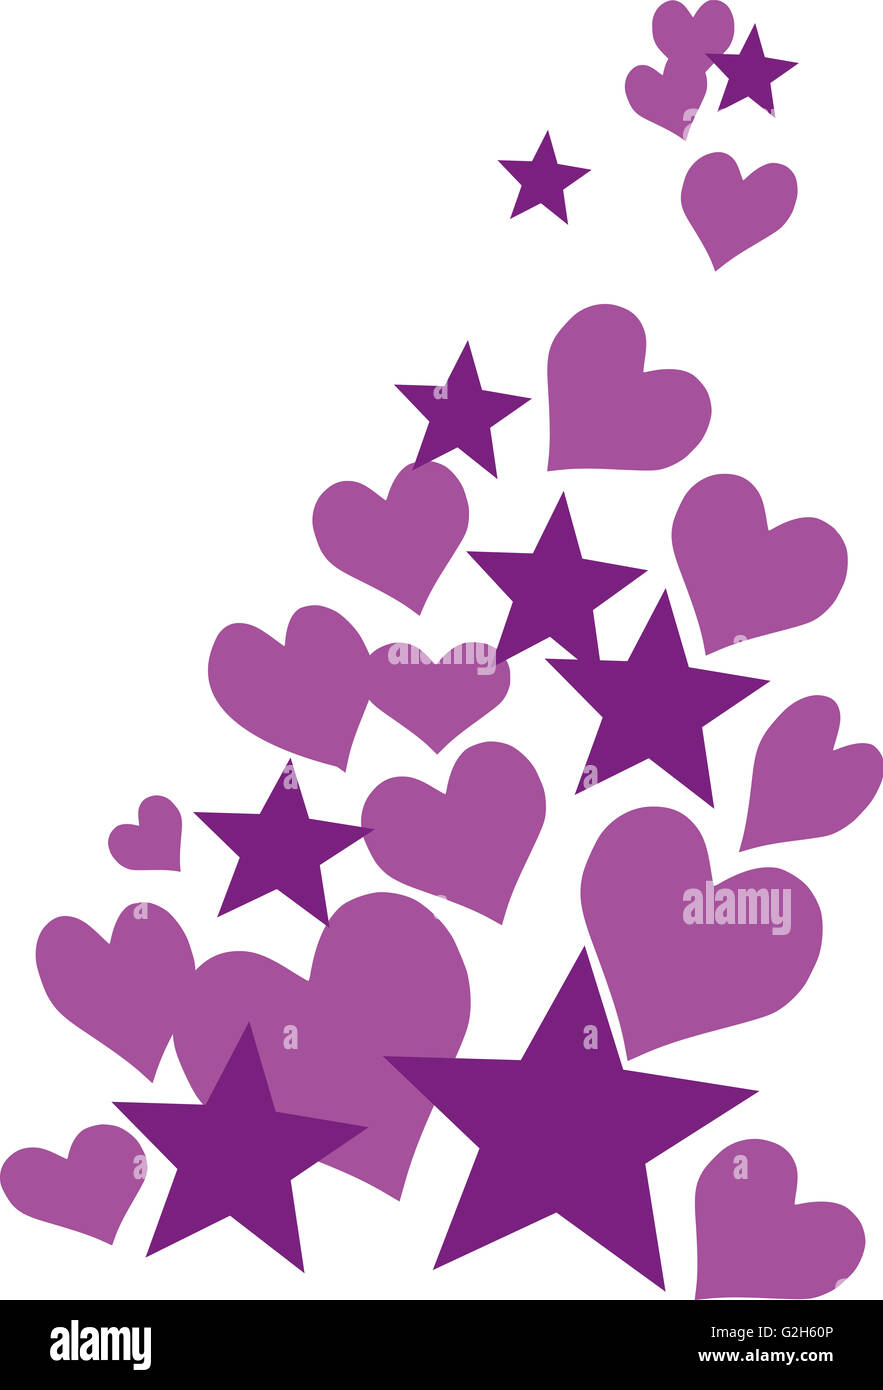 Set of purple hearts and stars Stock Photo